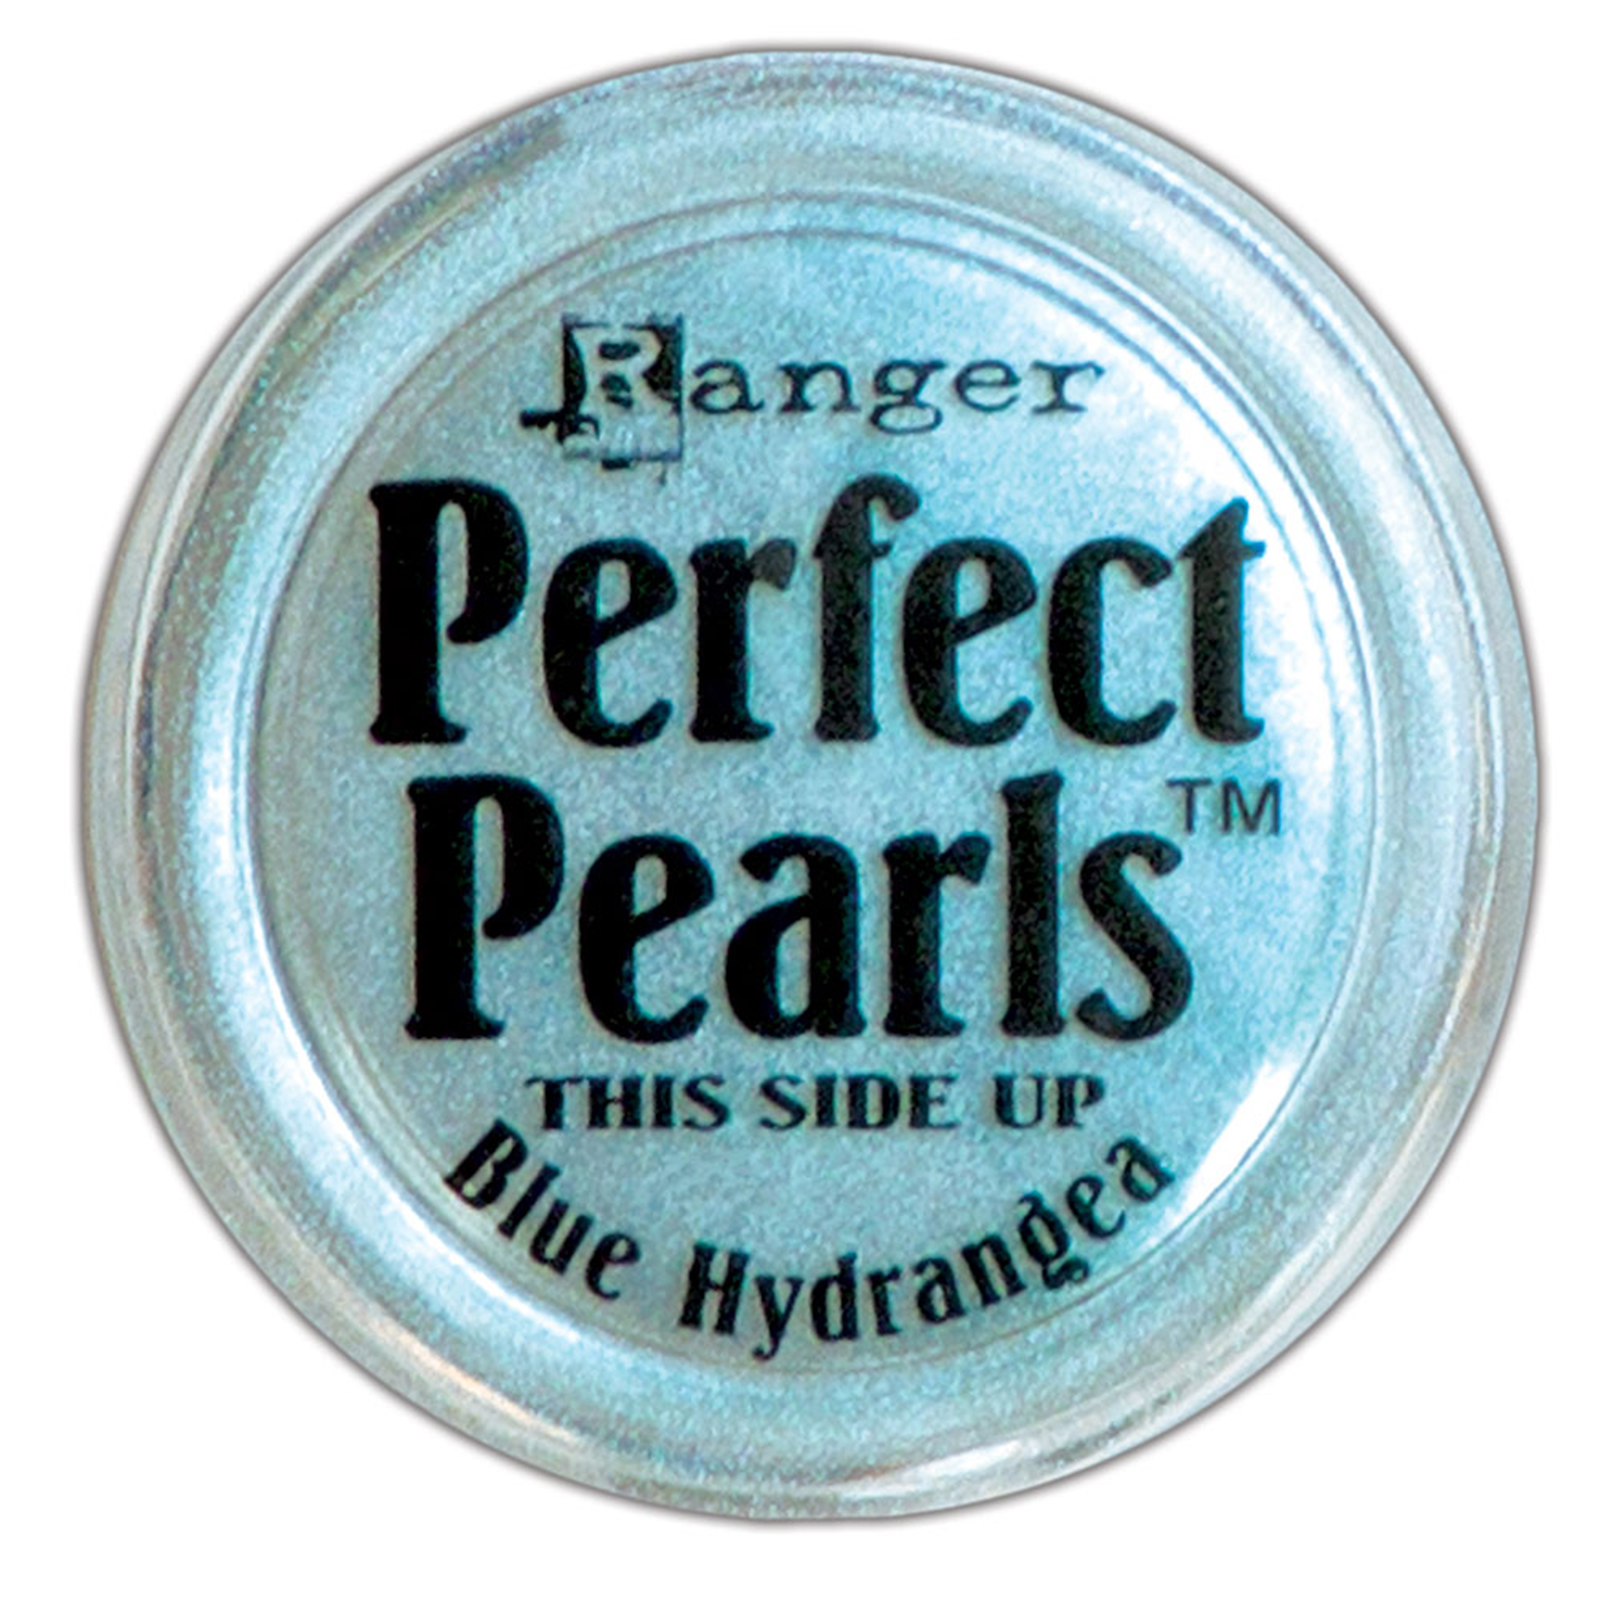 Ranger • Perfect pearls Pigment powder Blue hydrangea